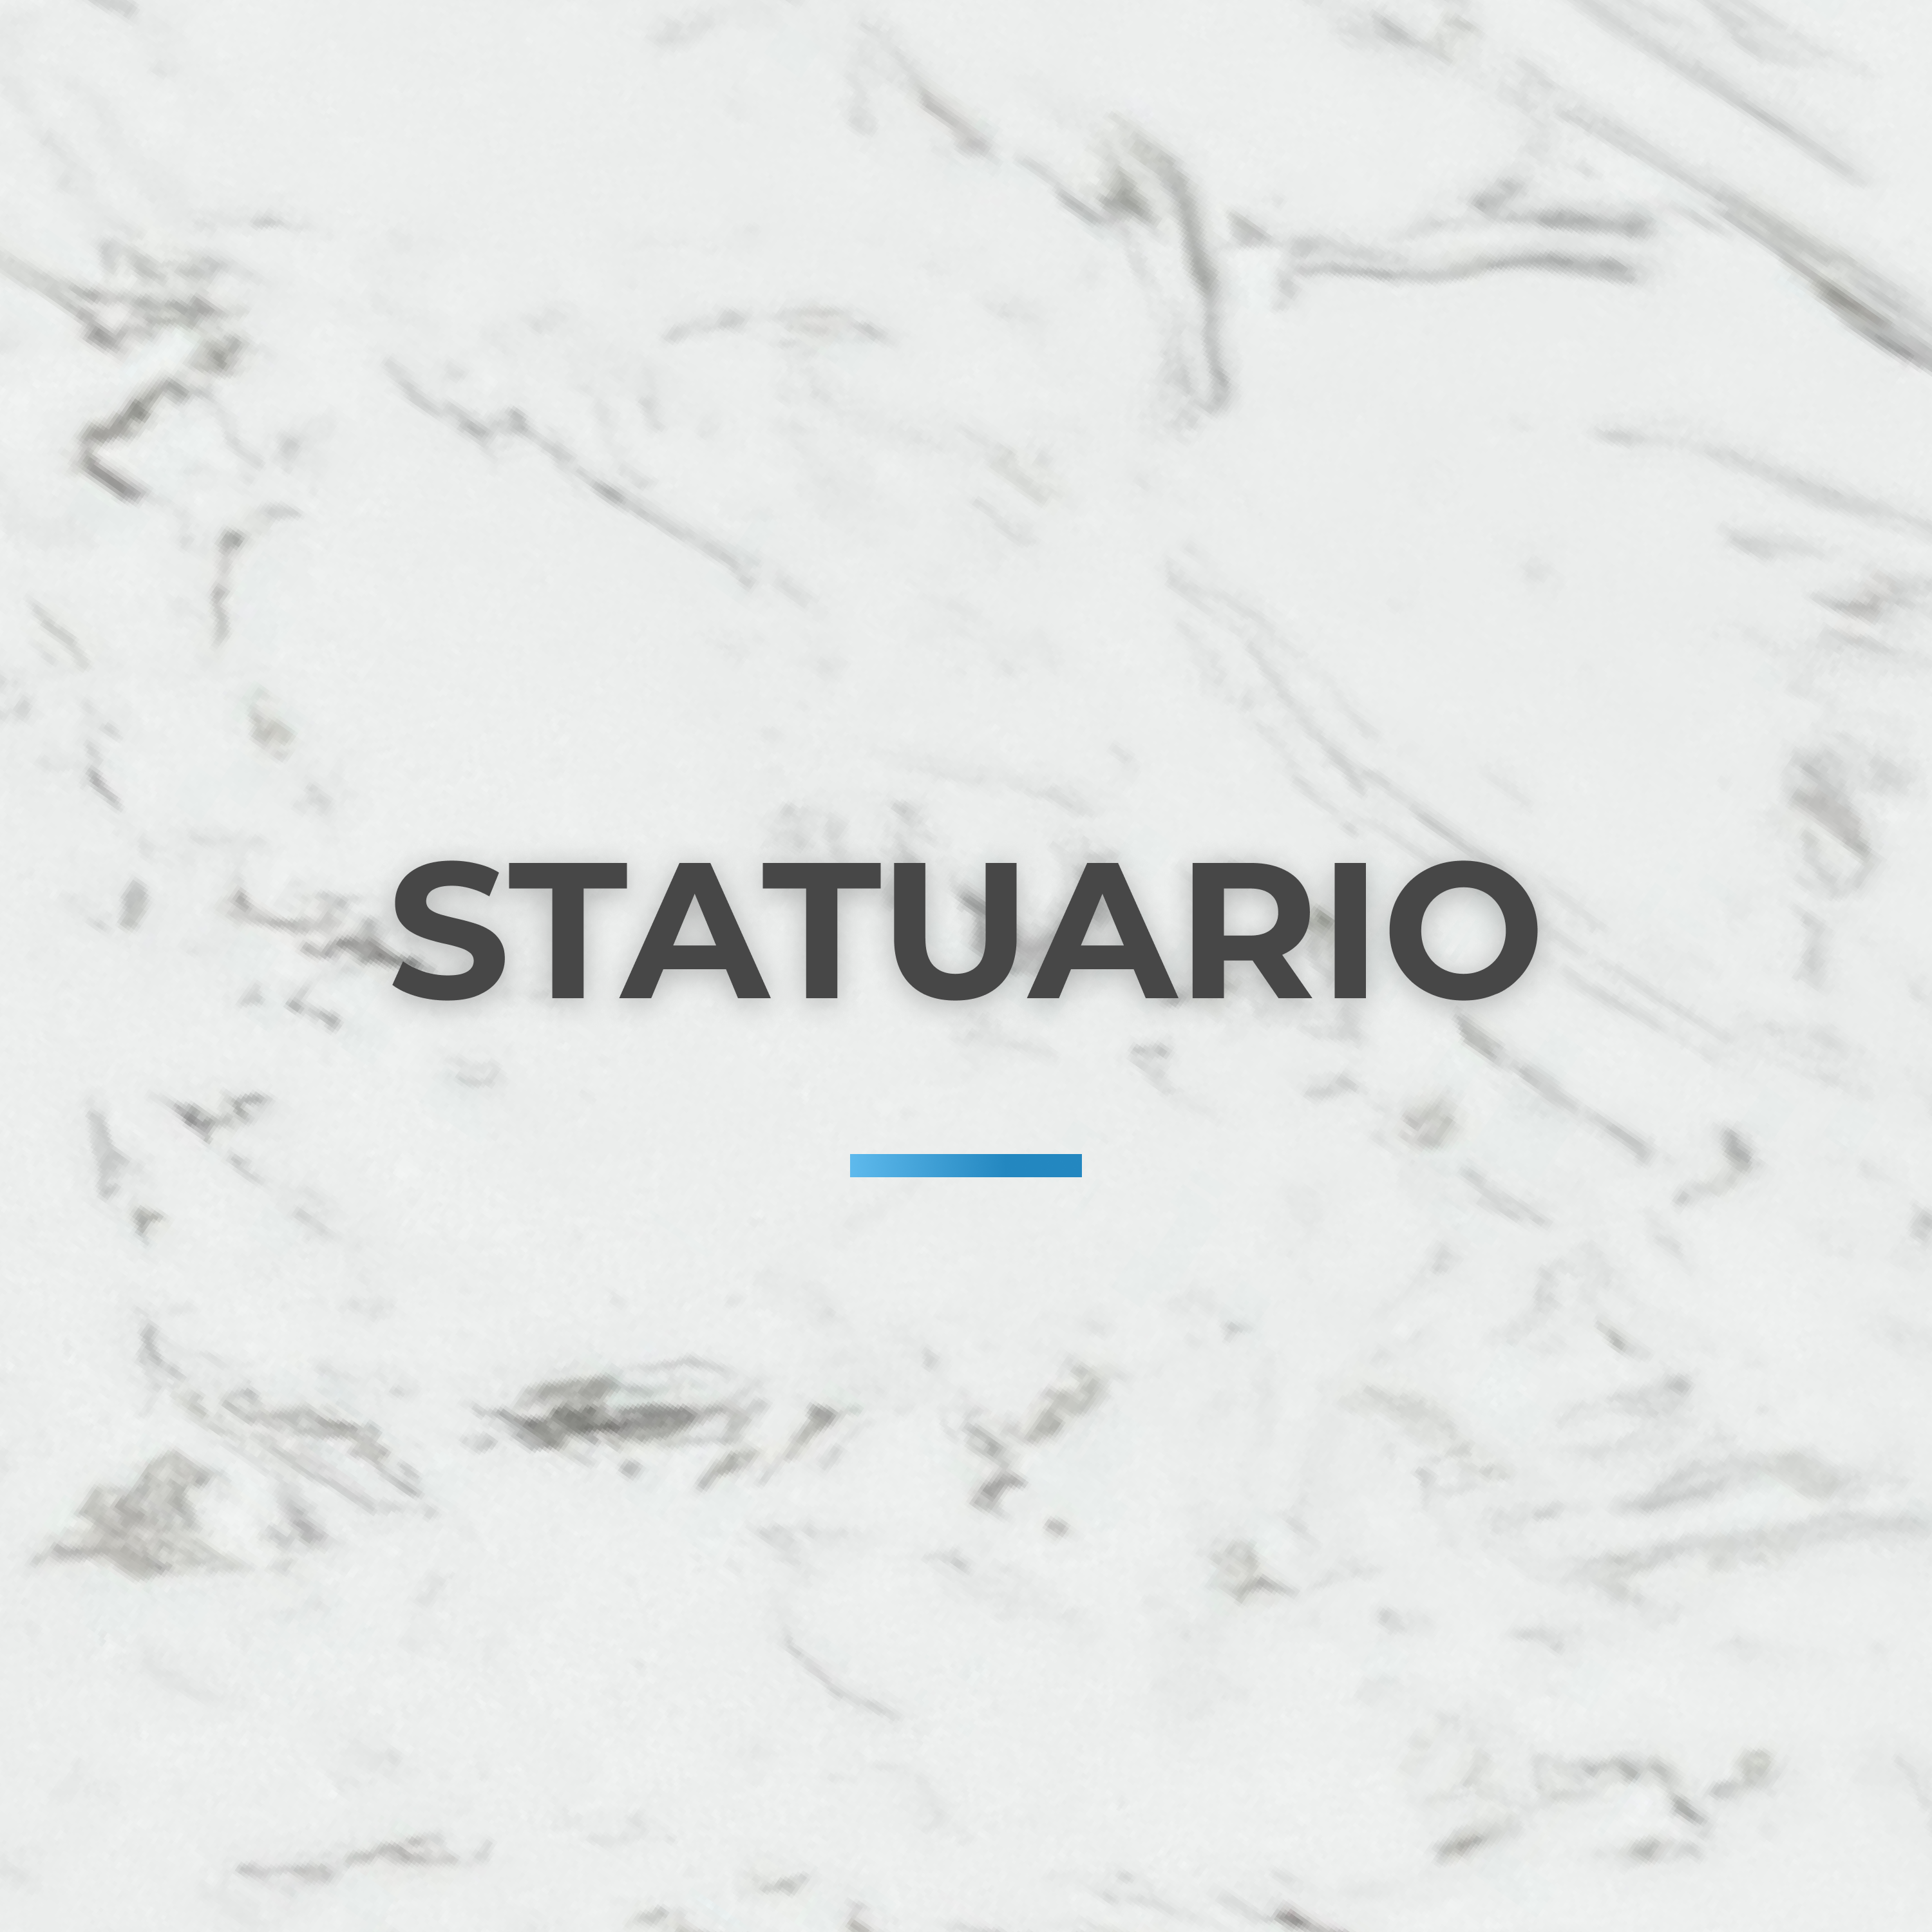 Statuario collection